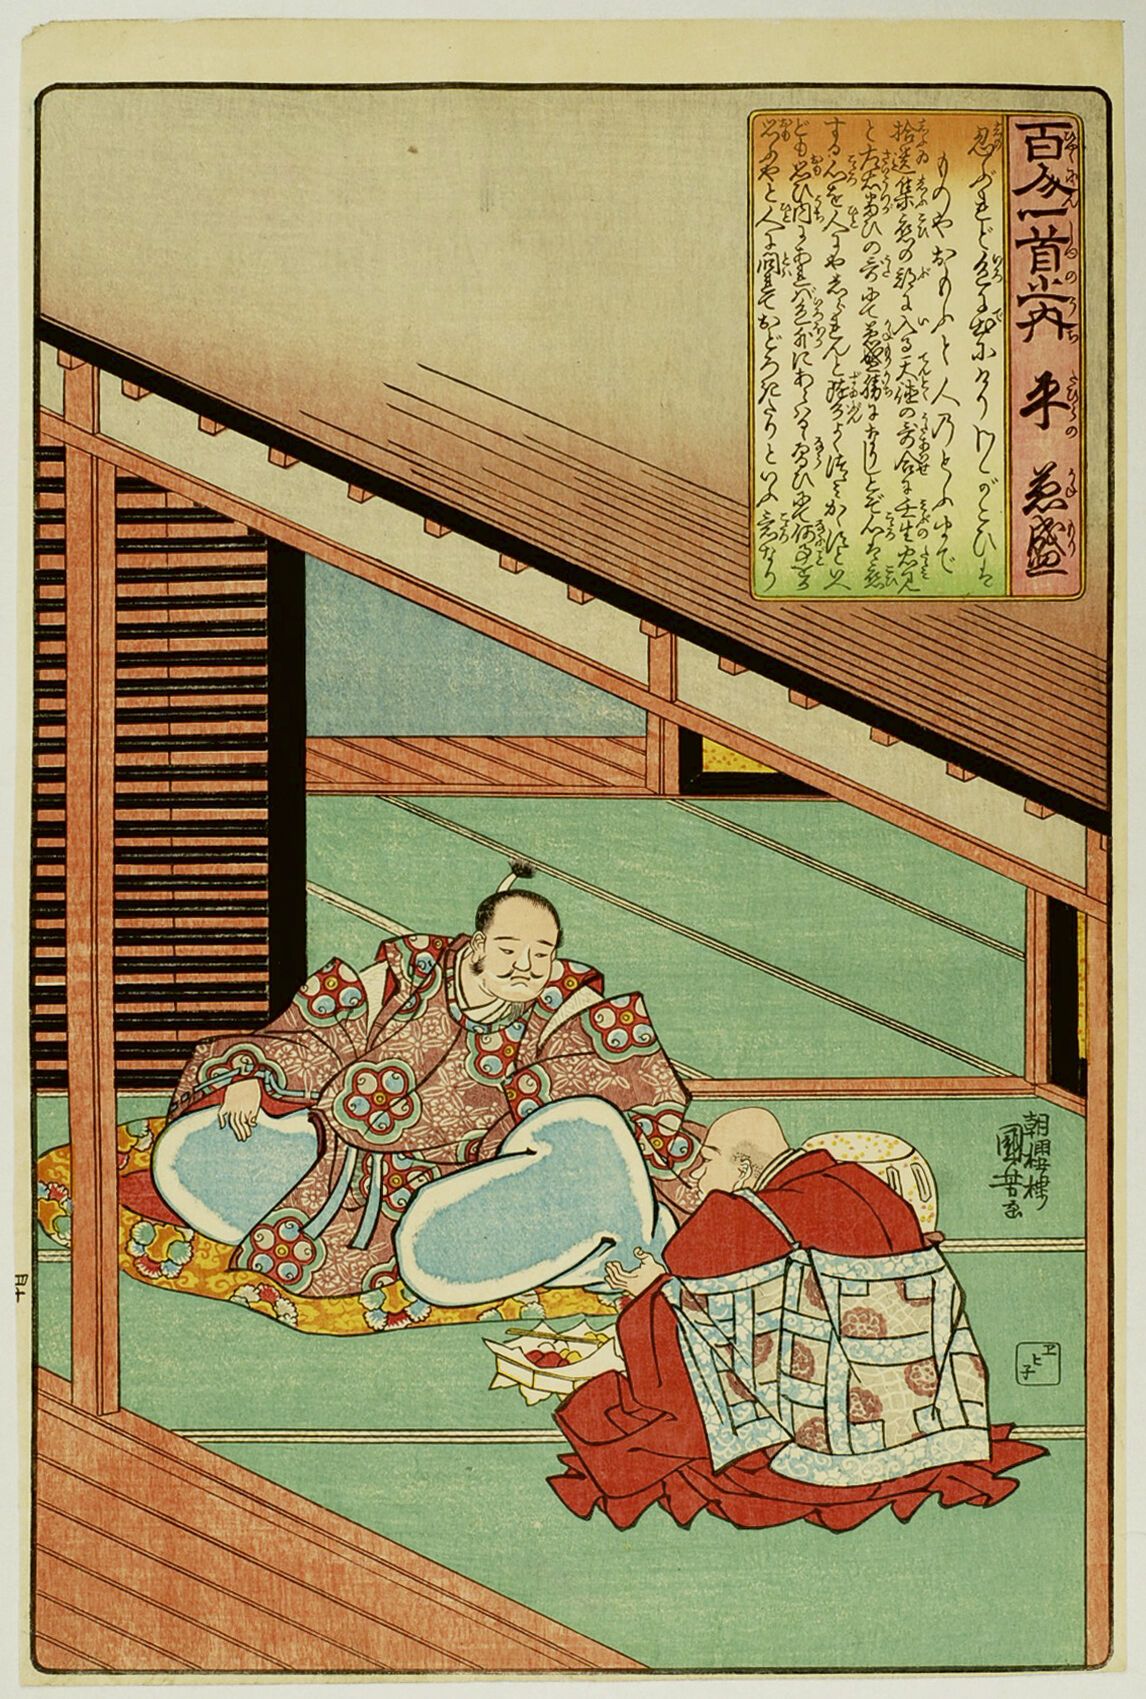 Null 宇多川国义 (1797-1861)
百人一首》系列中的 "Oban tate-e"，板块为 "Taira no Kanemori"，诗人坐在阳台上的牧&hellip;